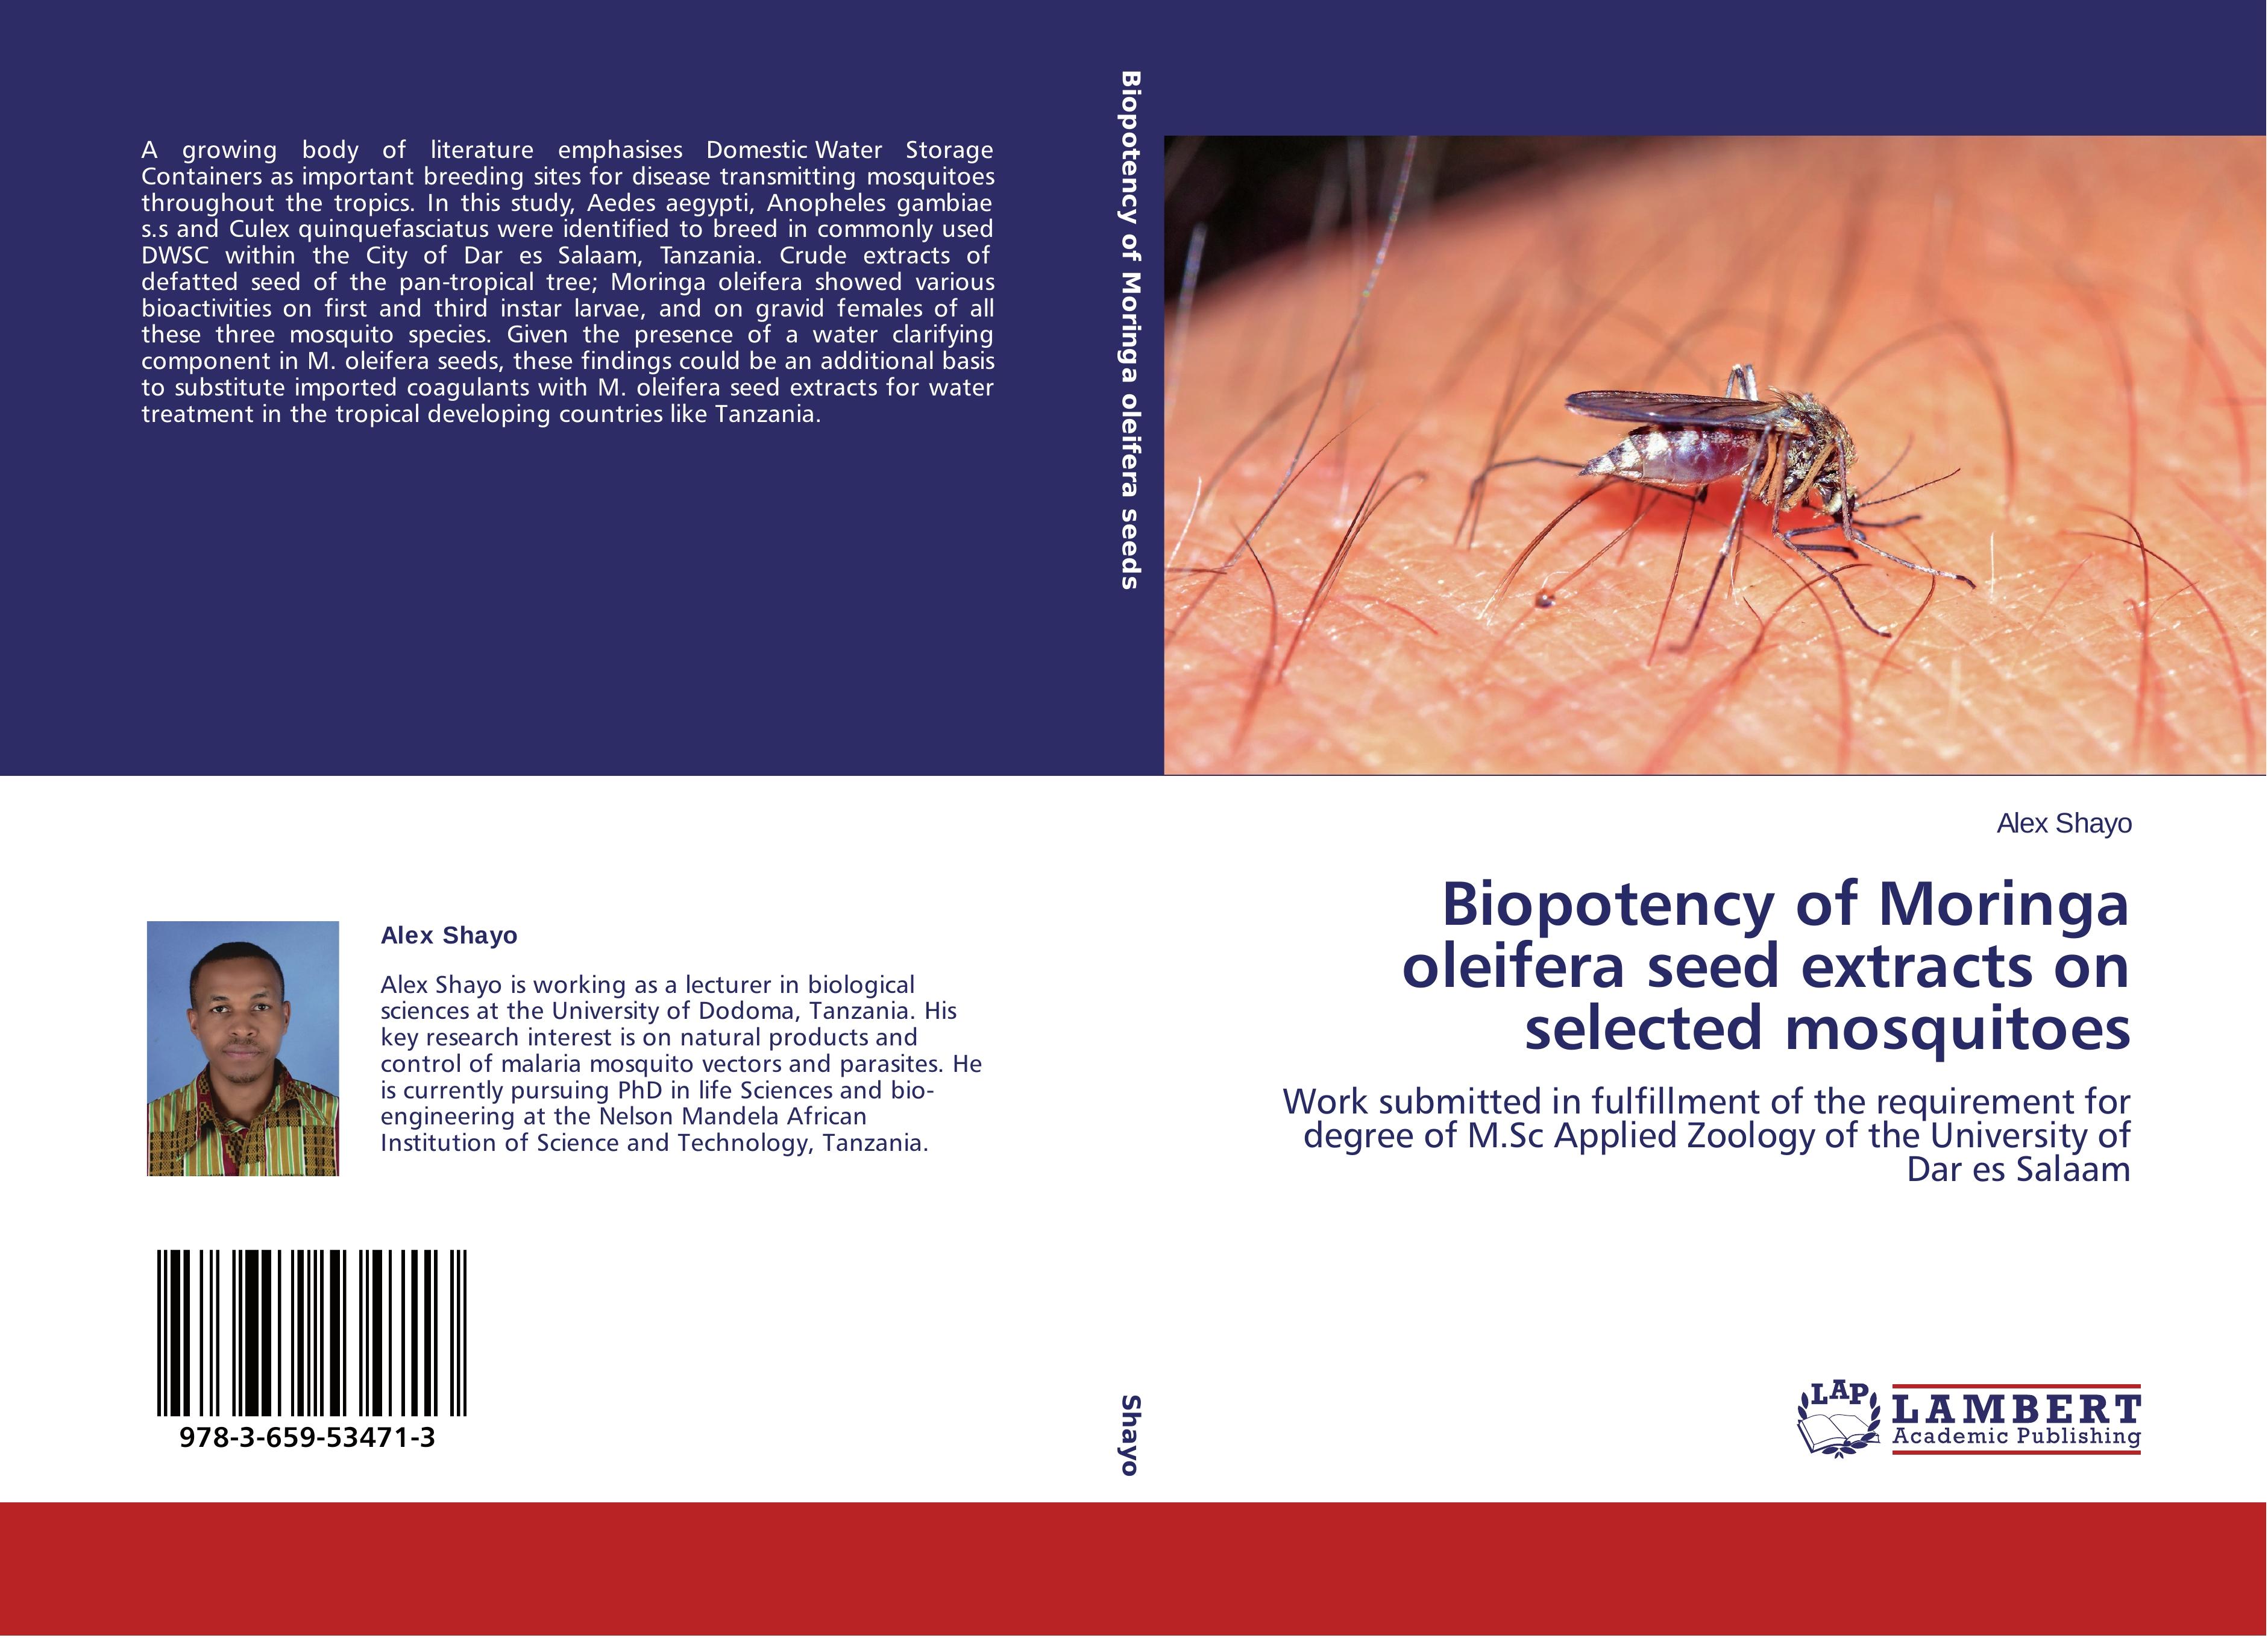 Biopotency of Moringa oleifera seed extracts on selected mosquitoes - Alex Shayo